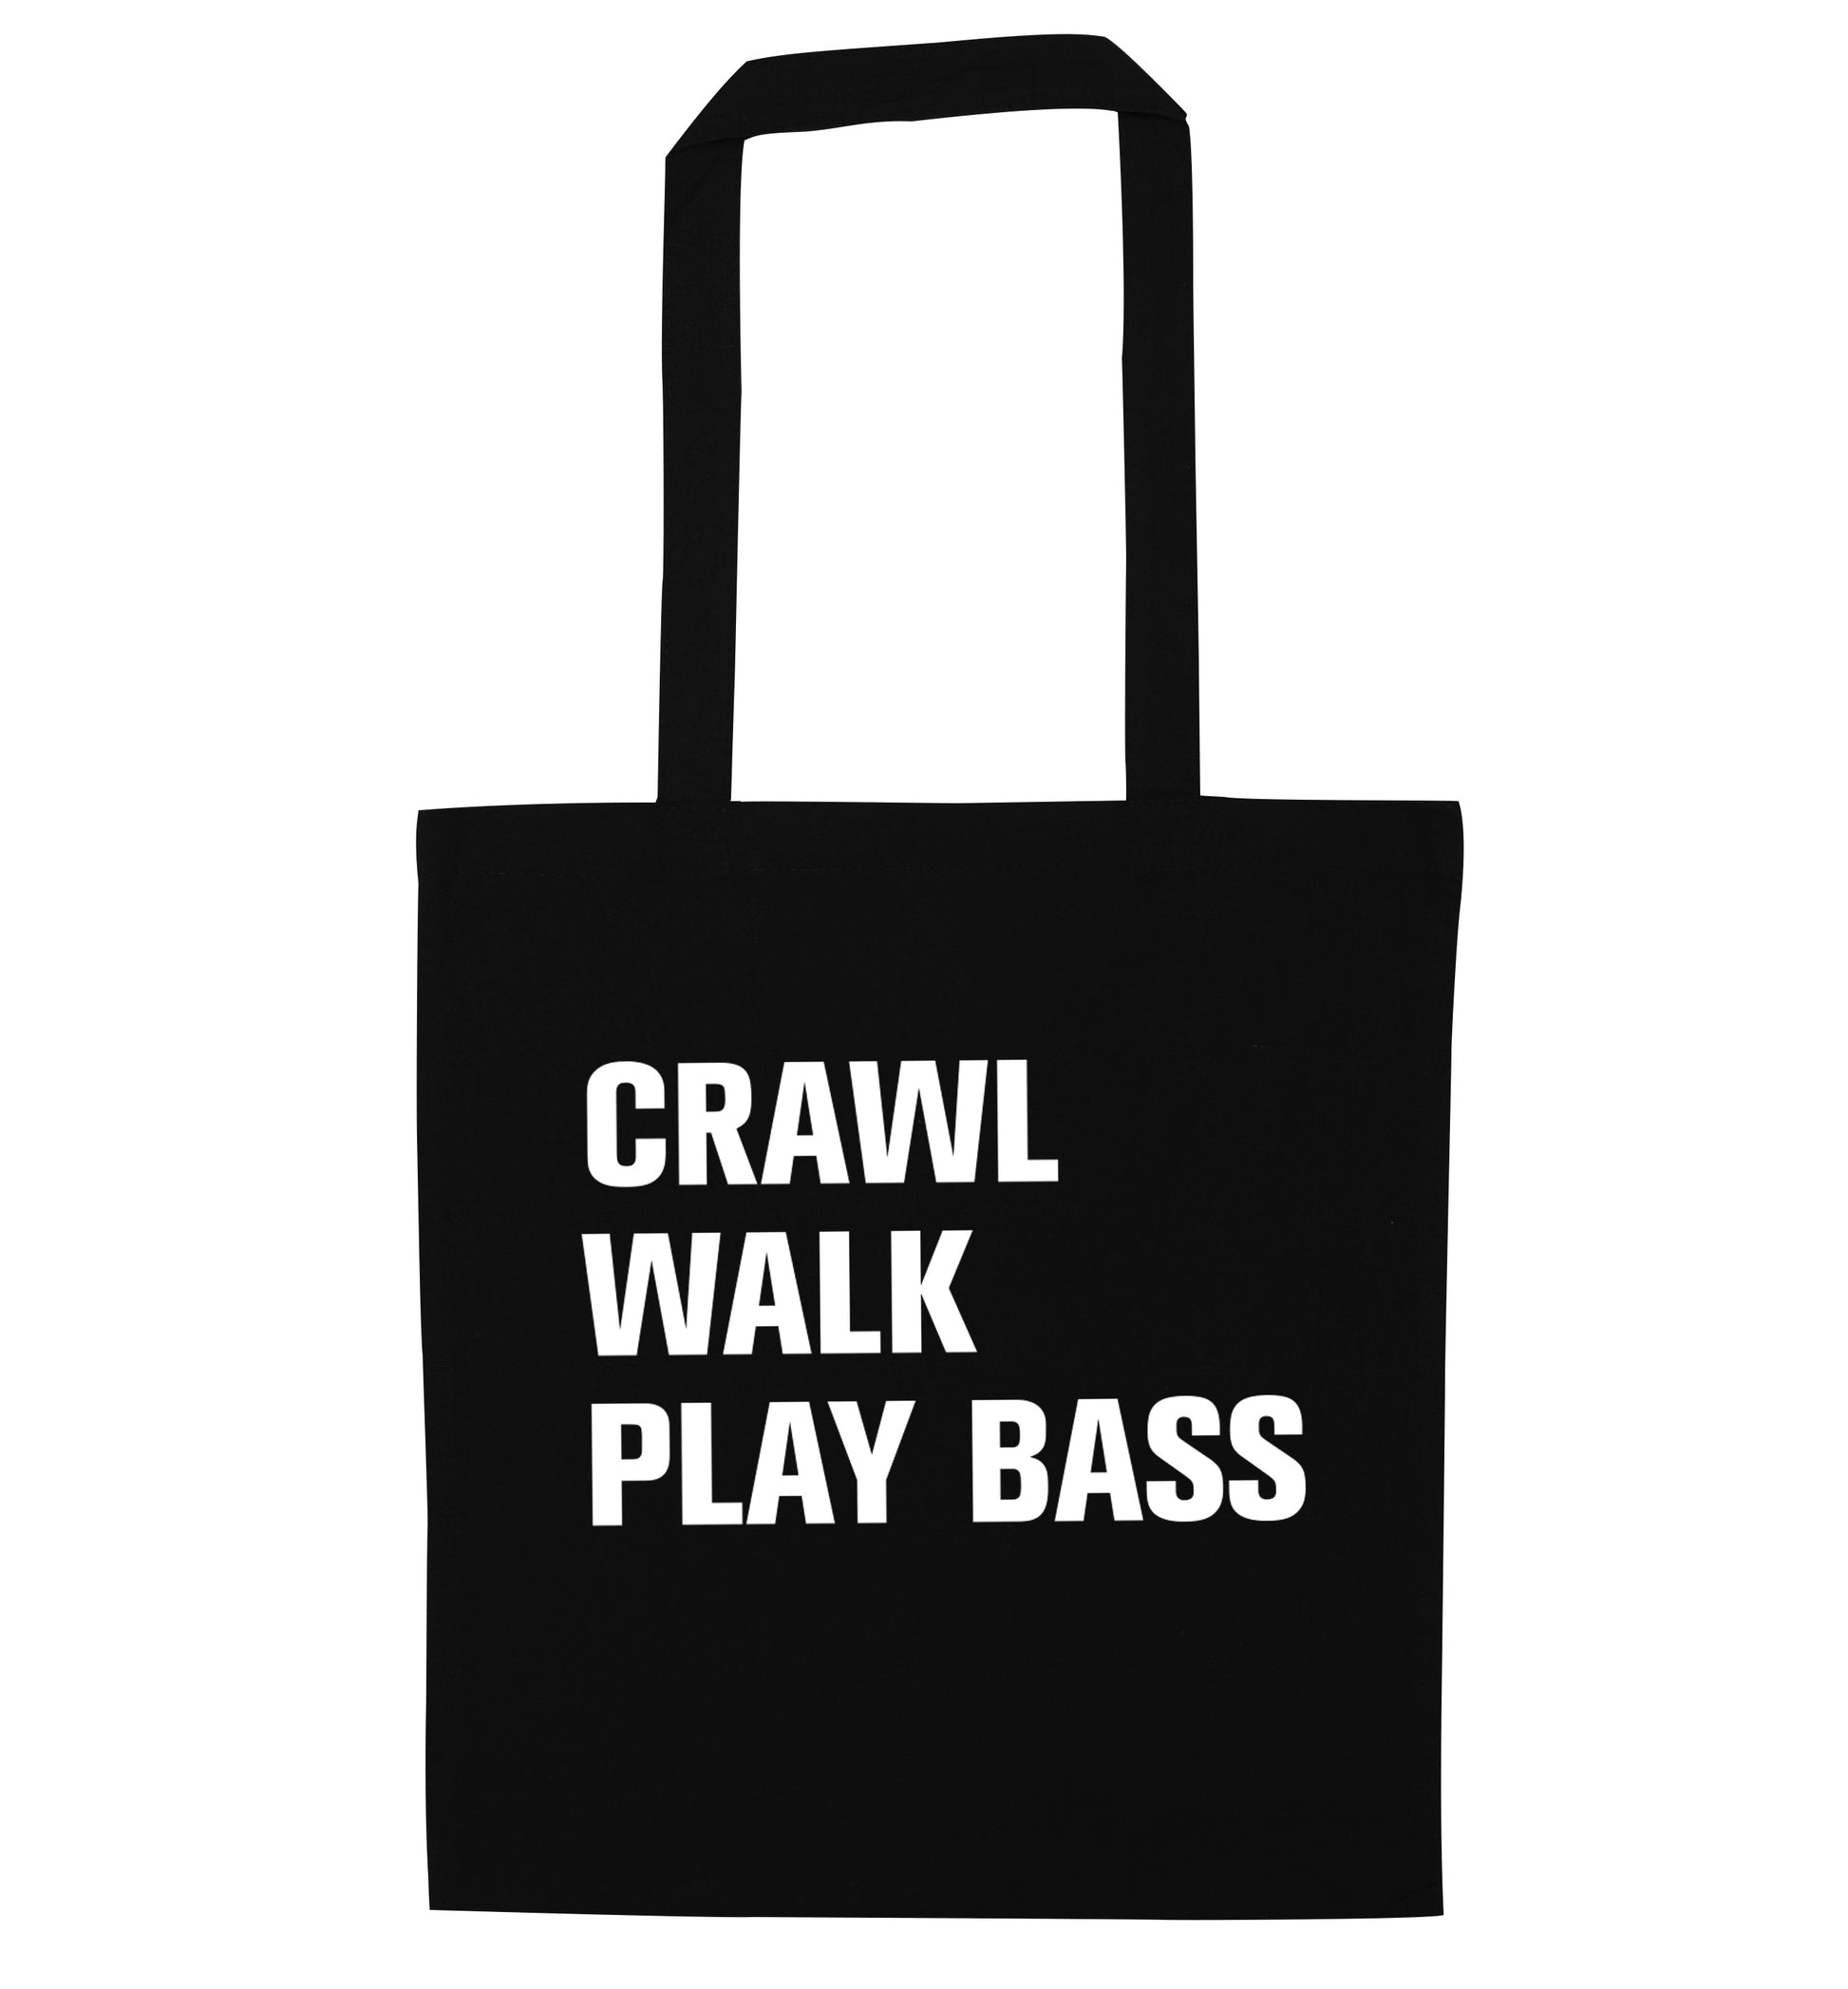 Crawl Walk Play Bass black tote bag